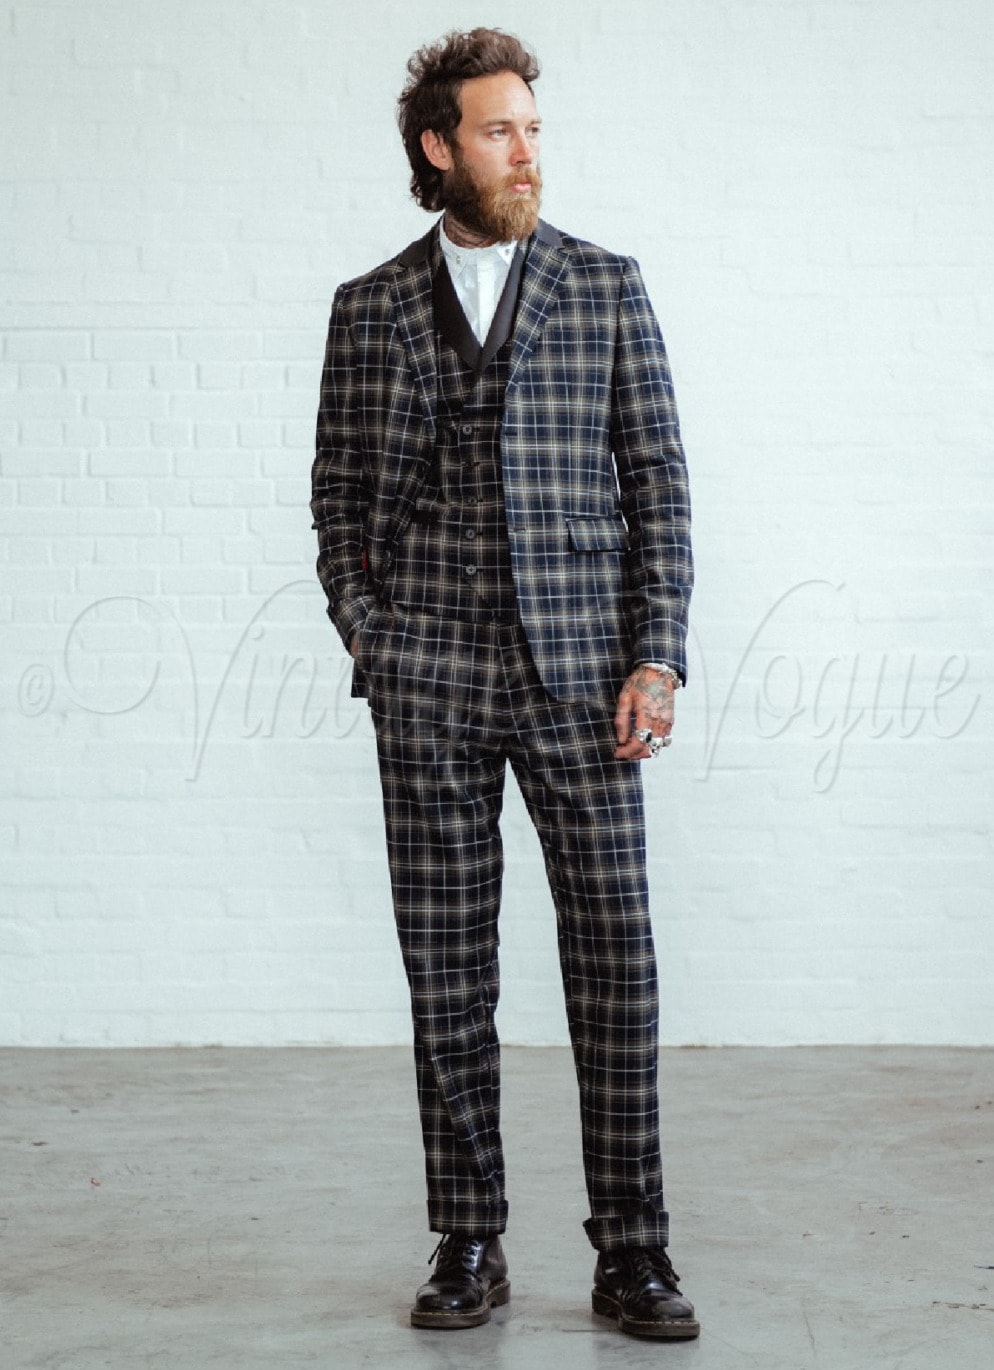 Chet Rock 40er Jahre Vintage Tartan Herren Anzug Jacke Chuck Blazer in Dunkelgrün Peaky Blinders Look Mode Anzug